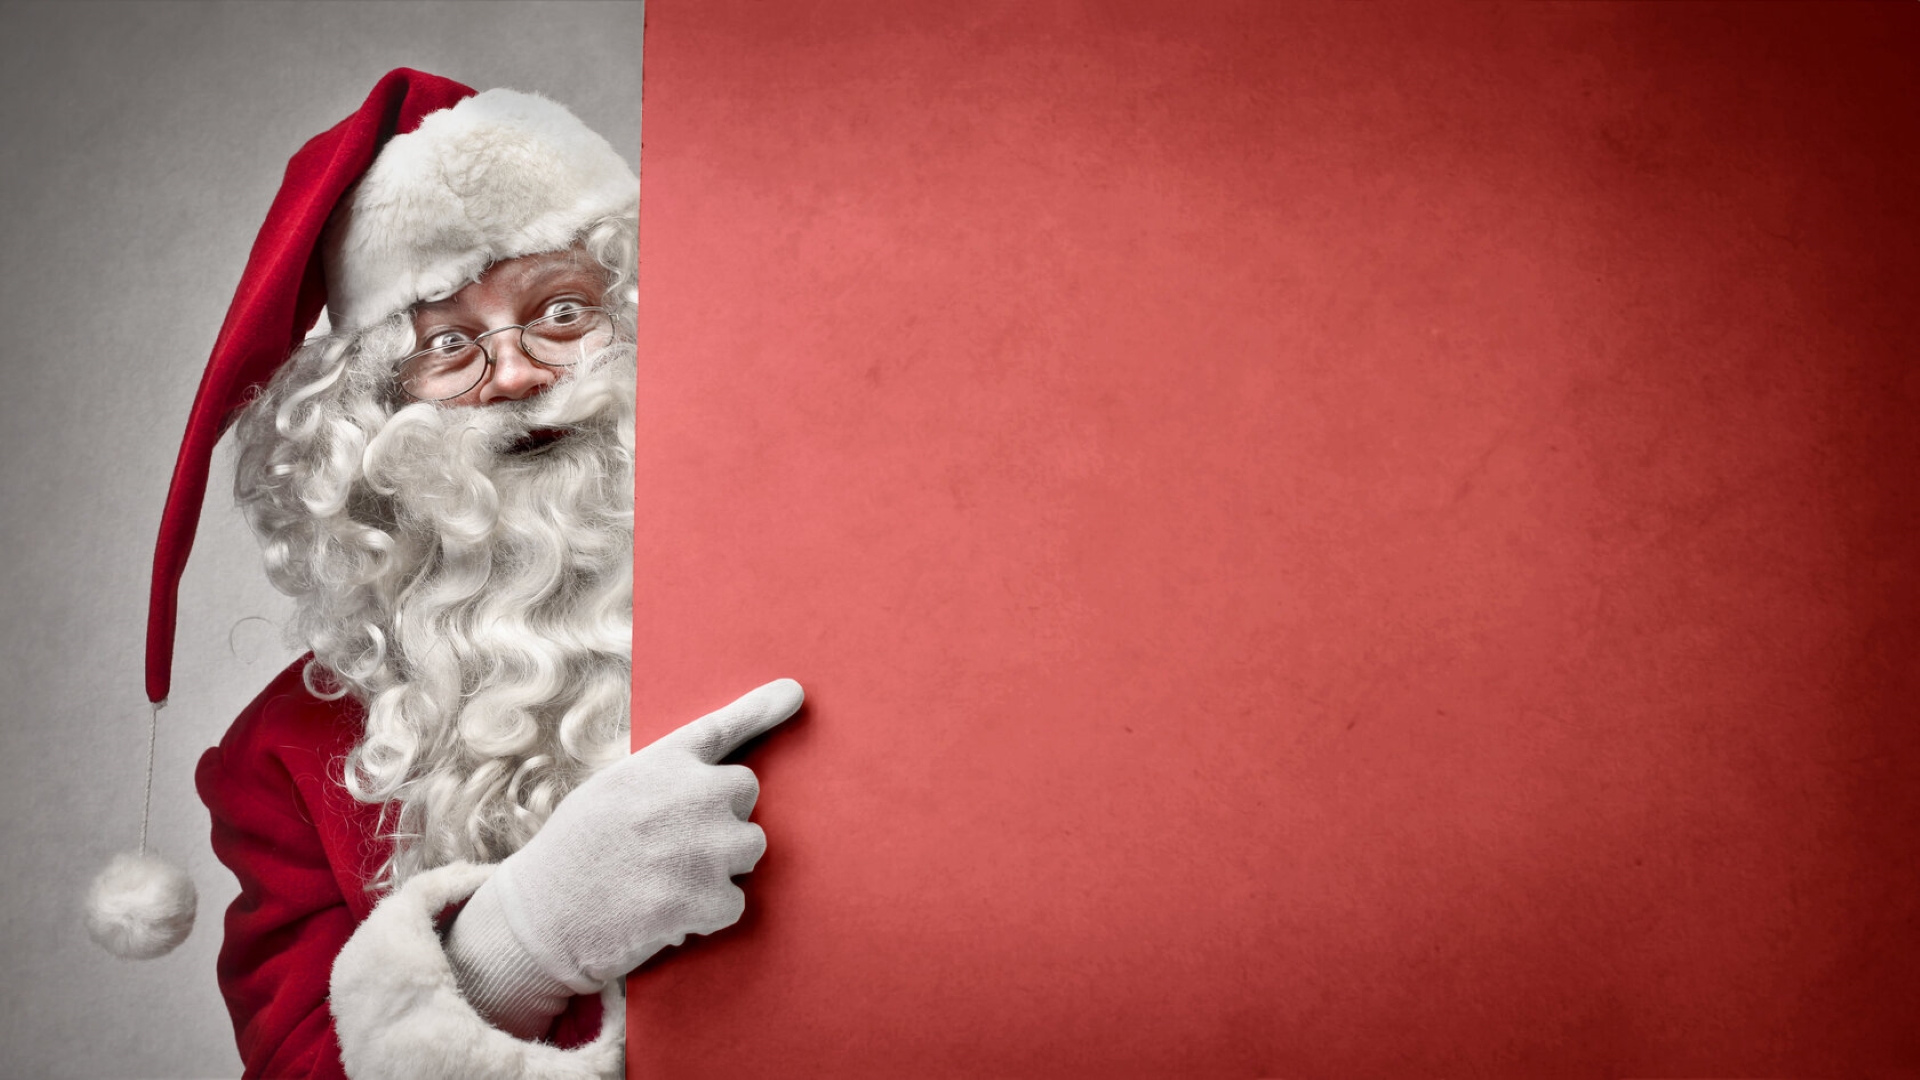 Santa-pointing-zoom-background-large